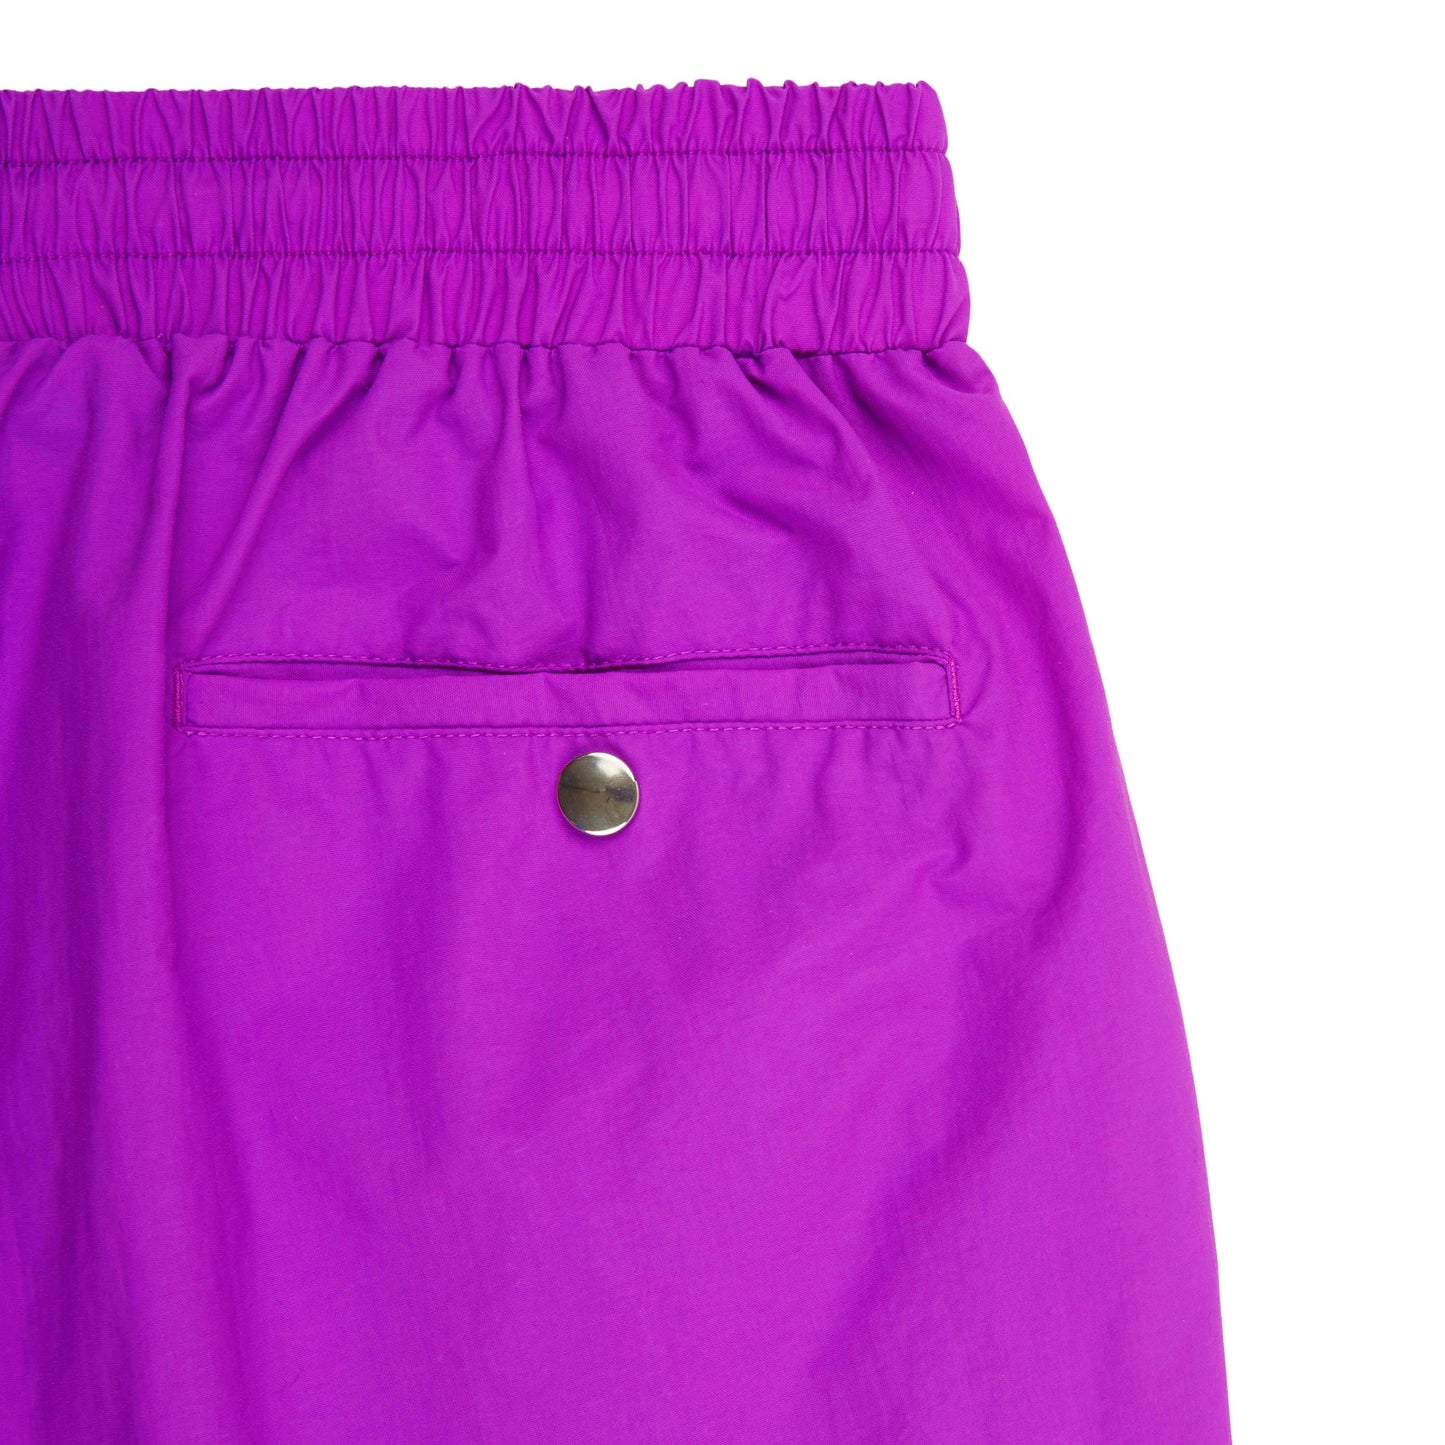 '90s Women's Nylon Shorts